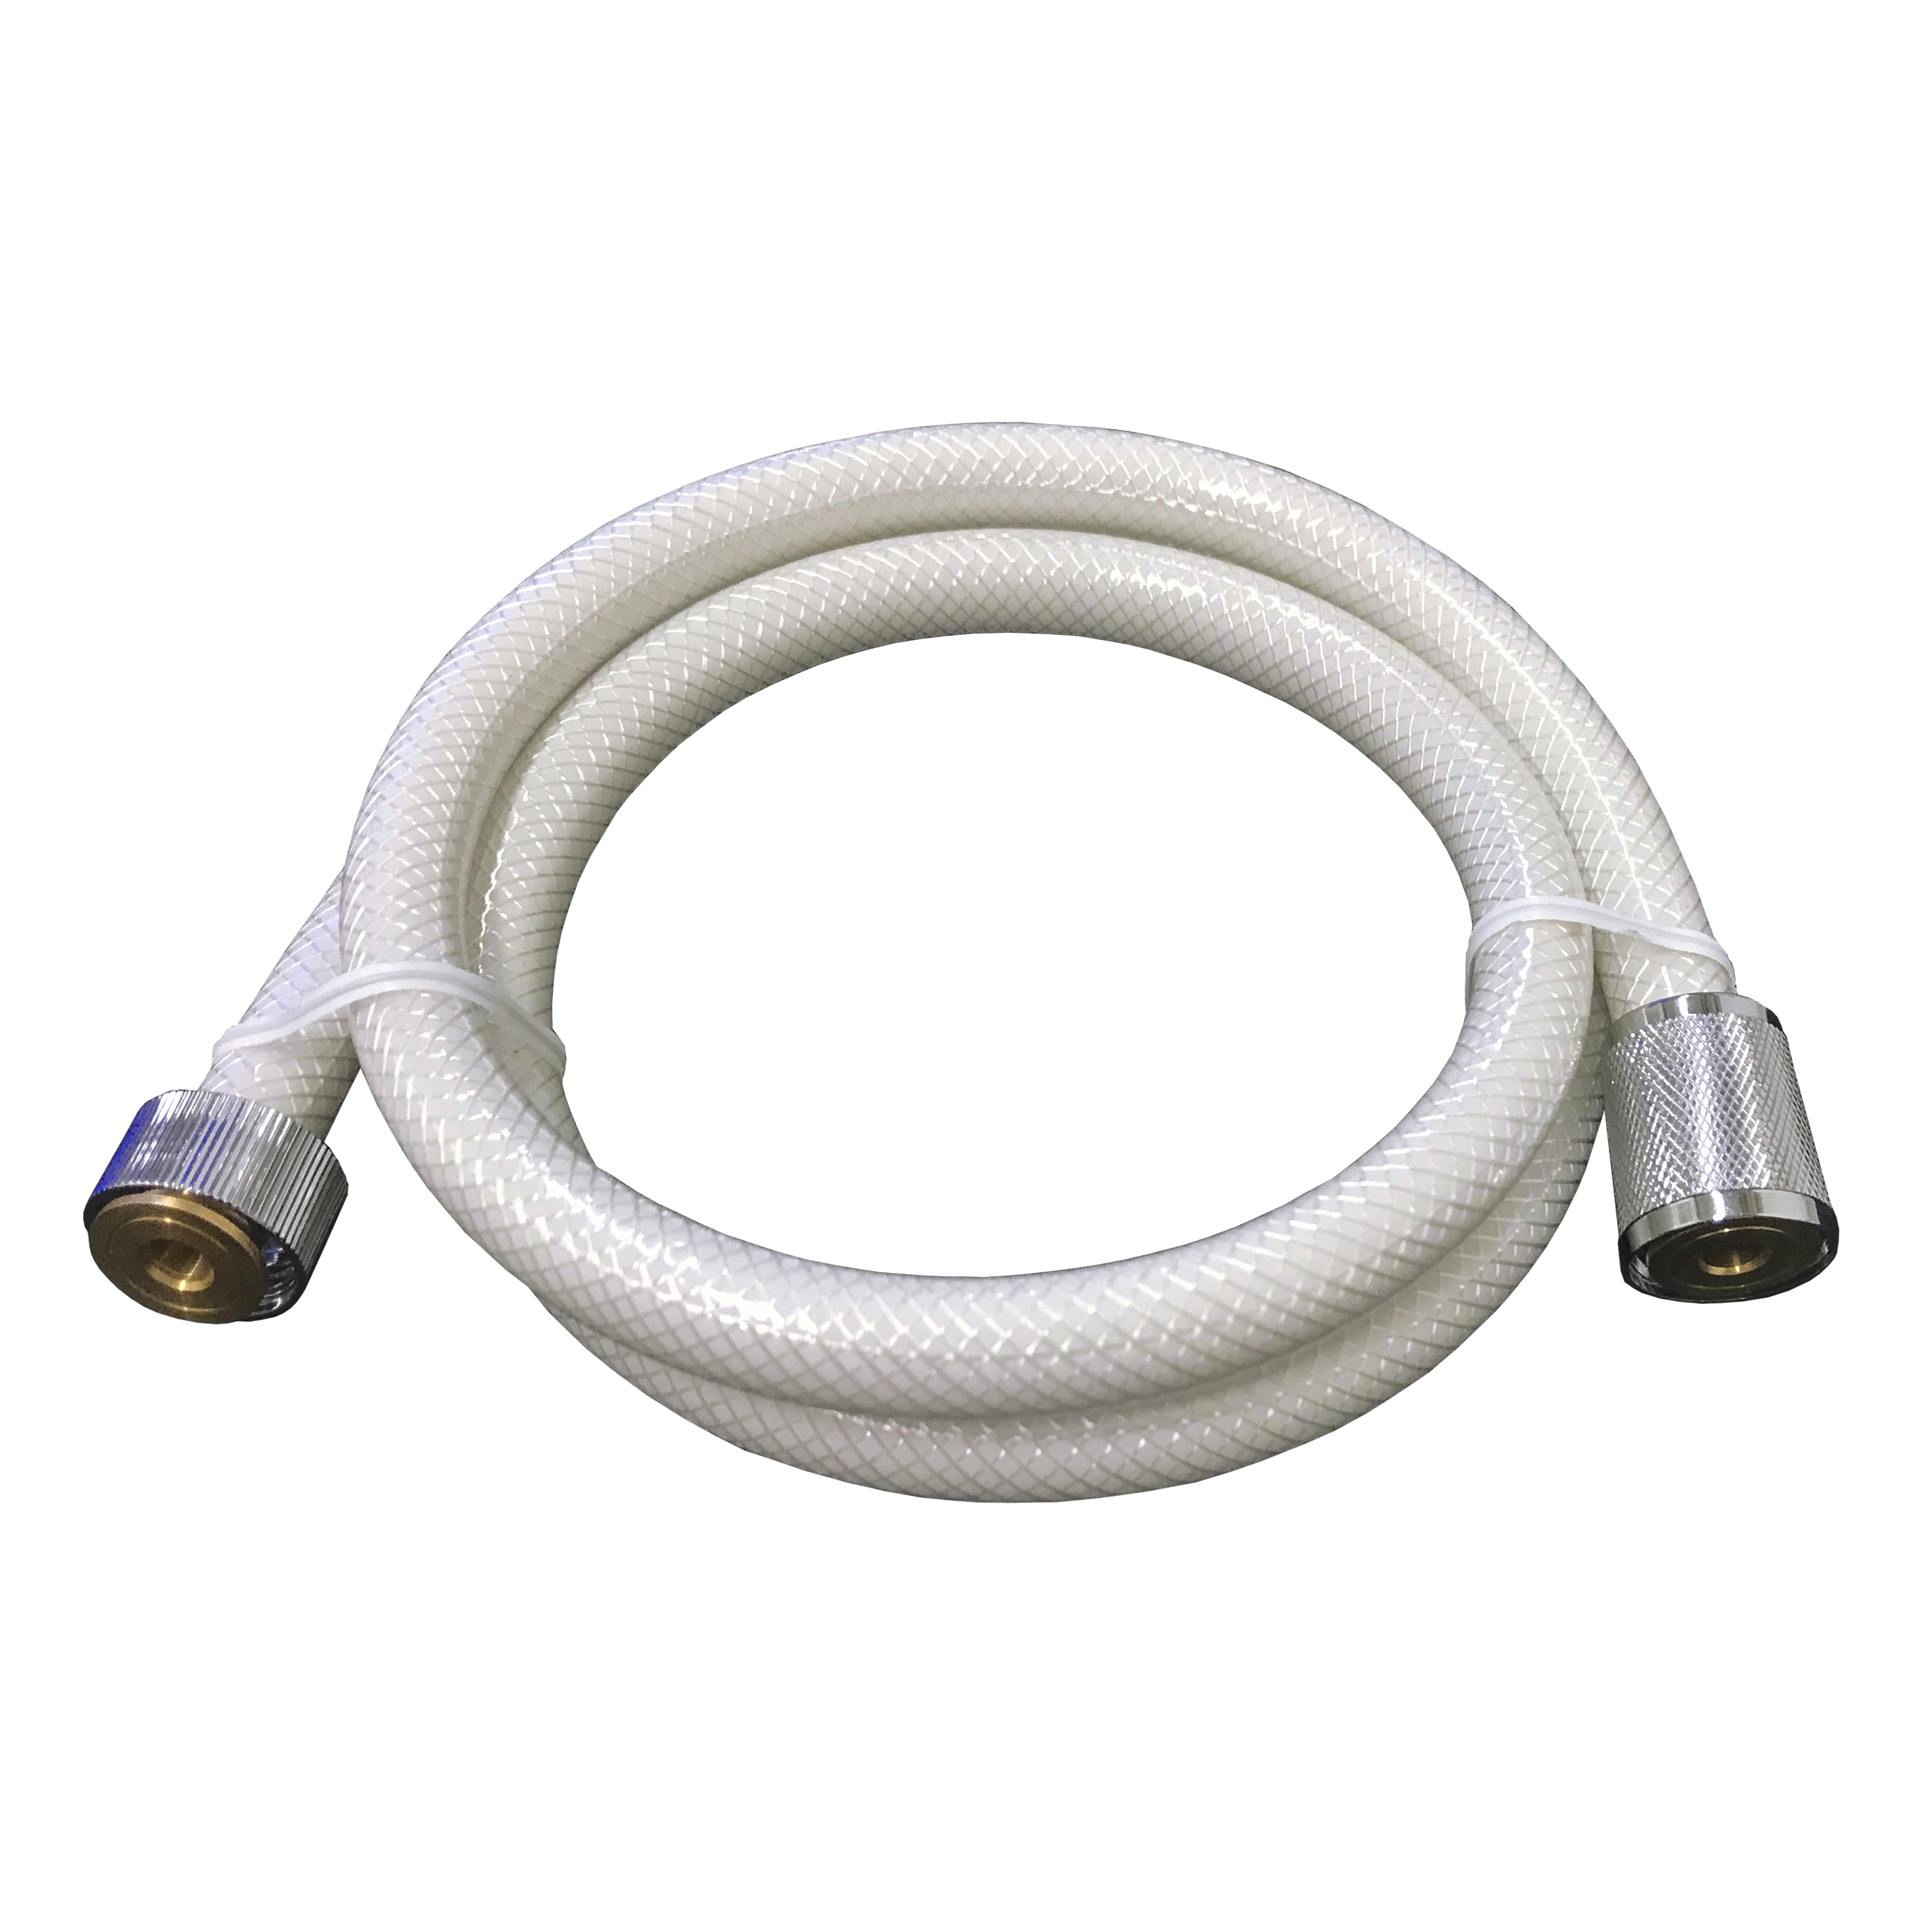 HUSKY 612-1.8m (6' PVC Flexible Hose (White))